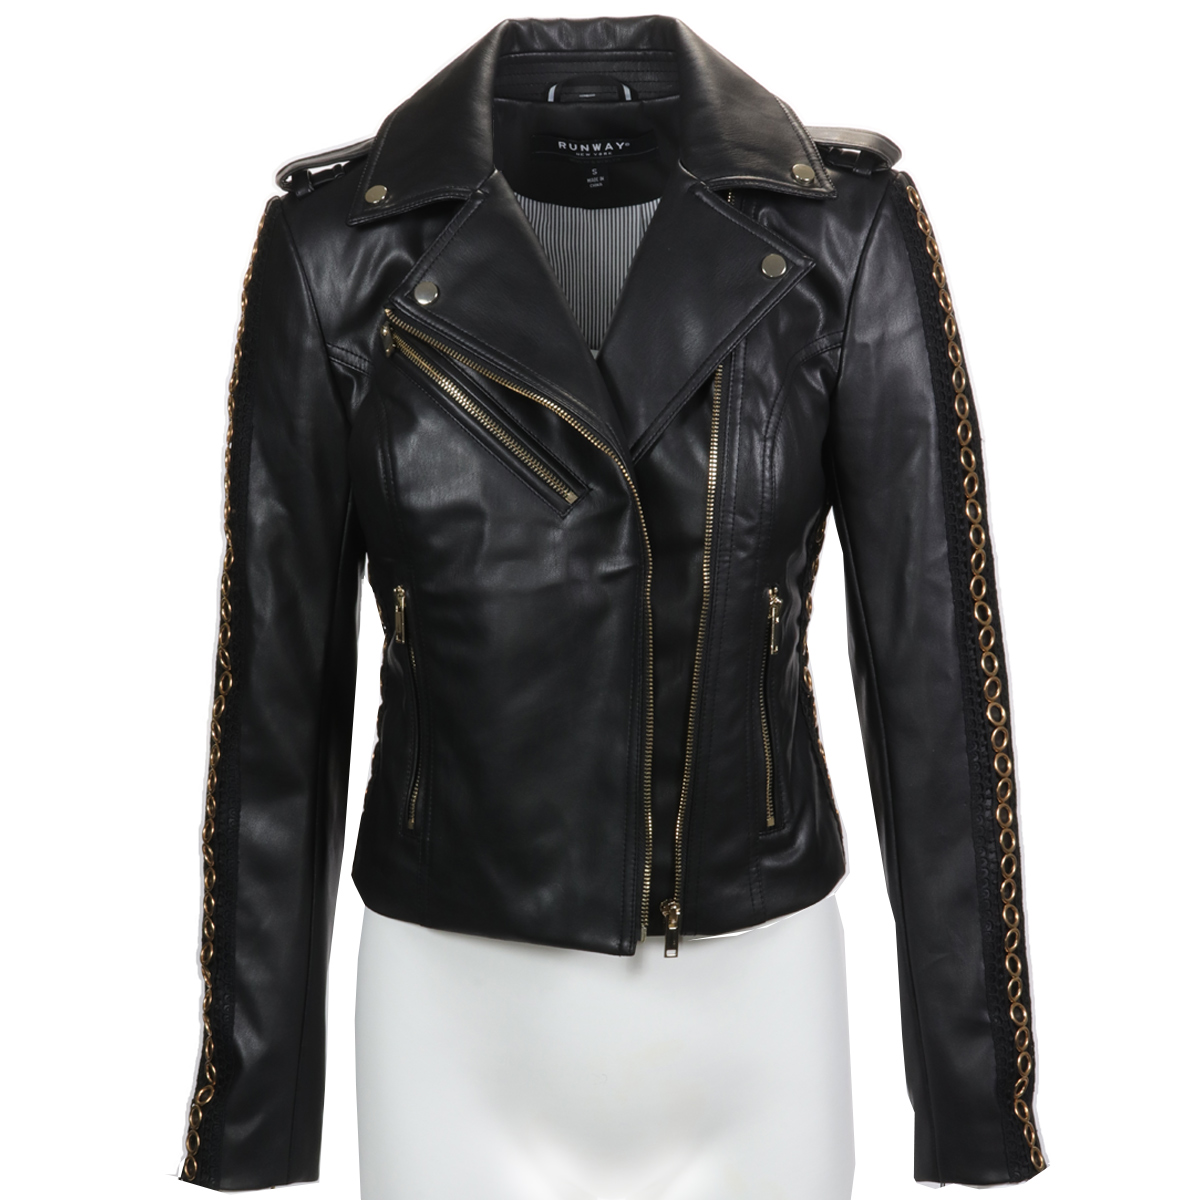 Black Biker Faux Leather Jacket in CA, - Moda Italy Fashion